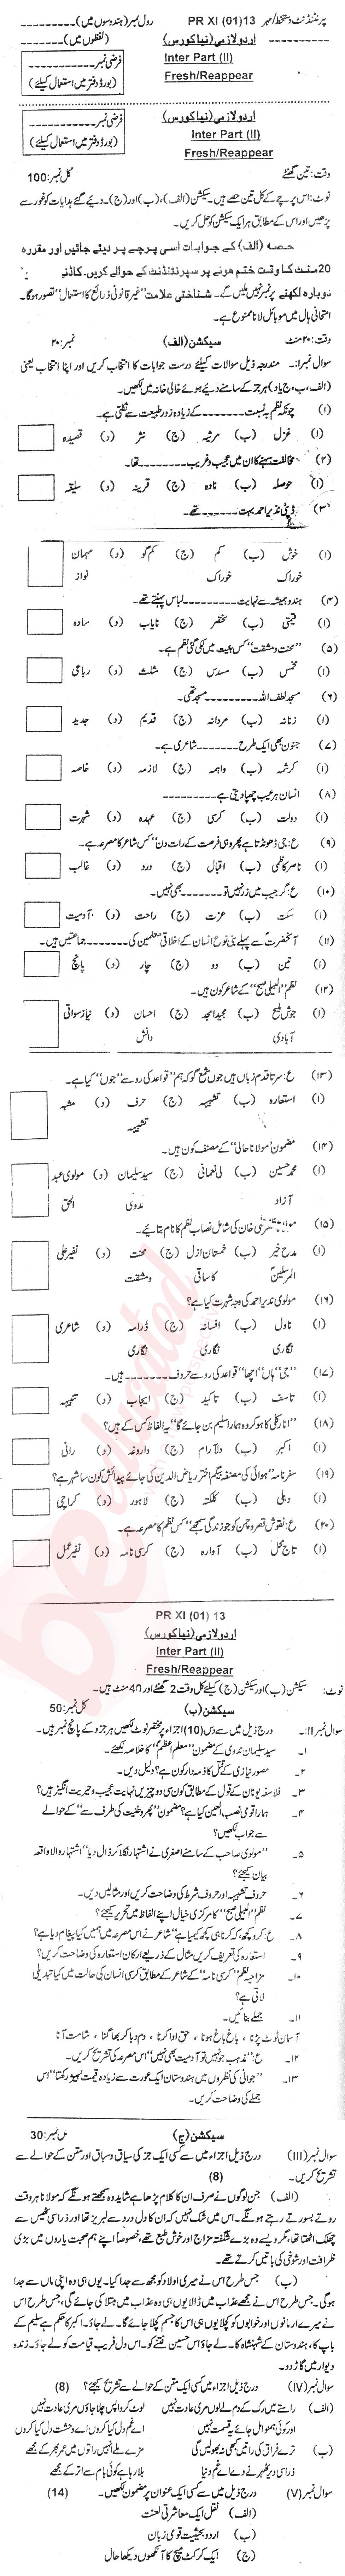 Urdu 12th class Past Paper Group 1 BISE Bannu 2013